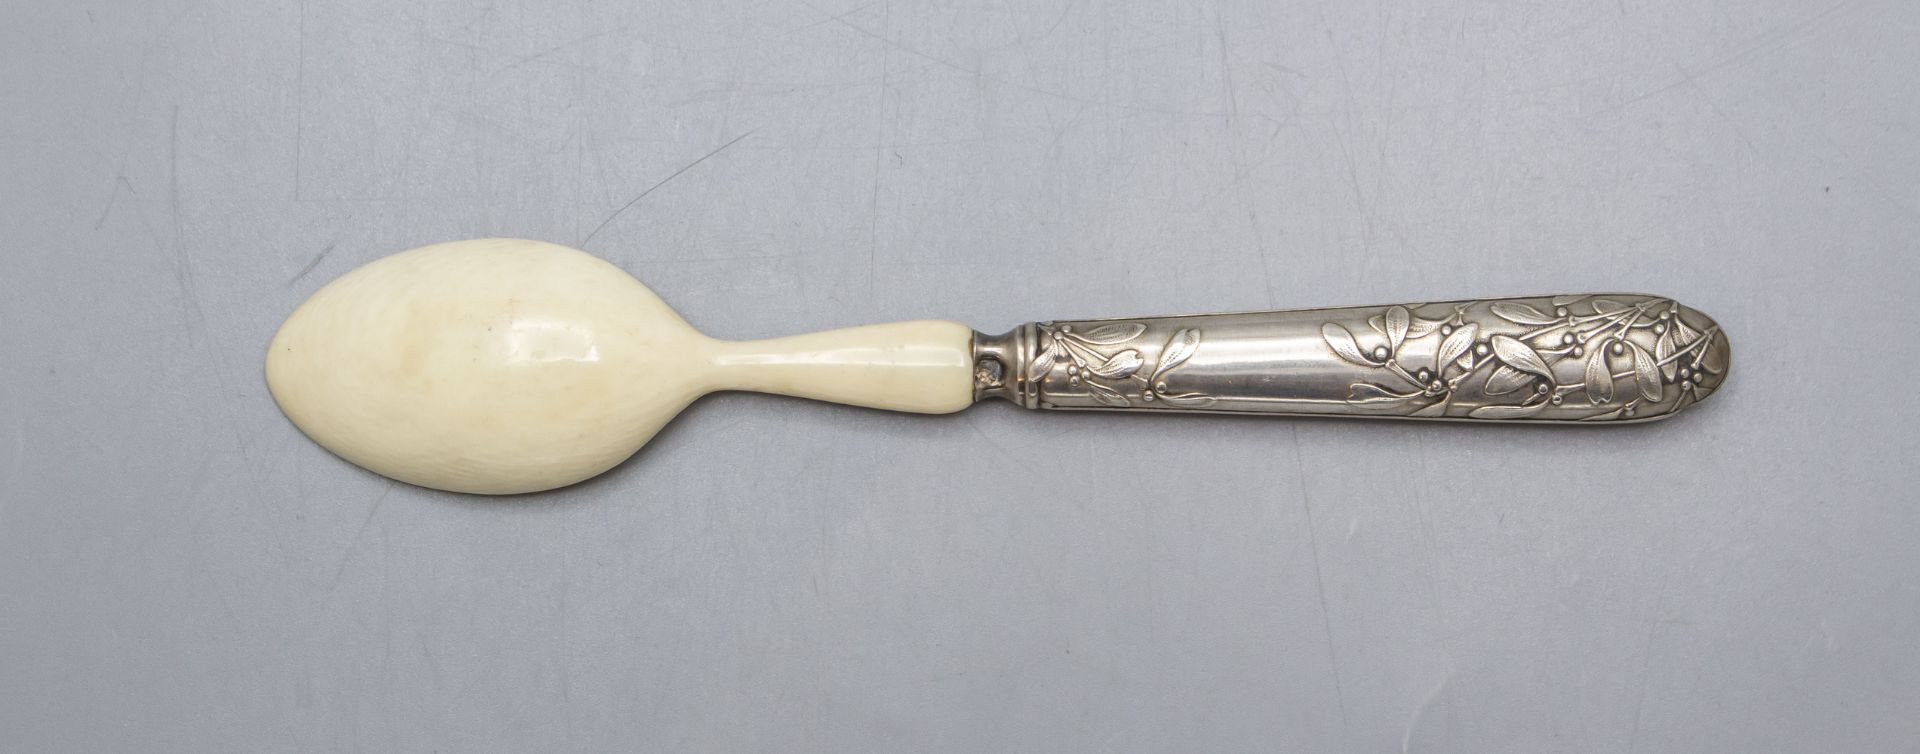 Jugendstil Löffel mit Misteldekor / An Art Nouveau spoon with mistletoe, Frankreich, um 1900 - Image 2 of 3